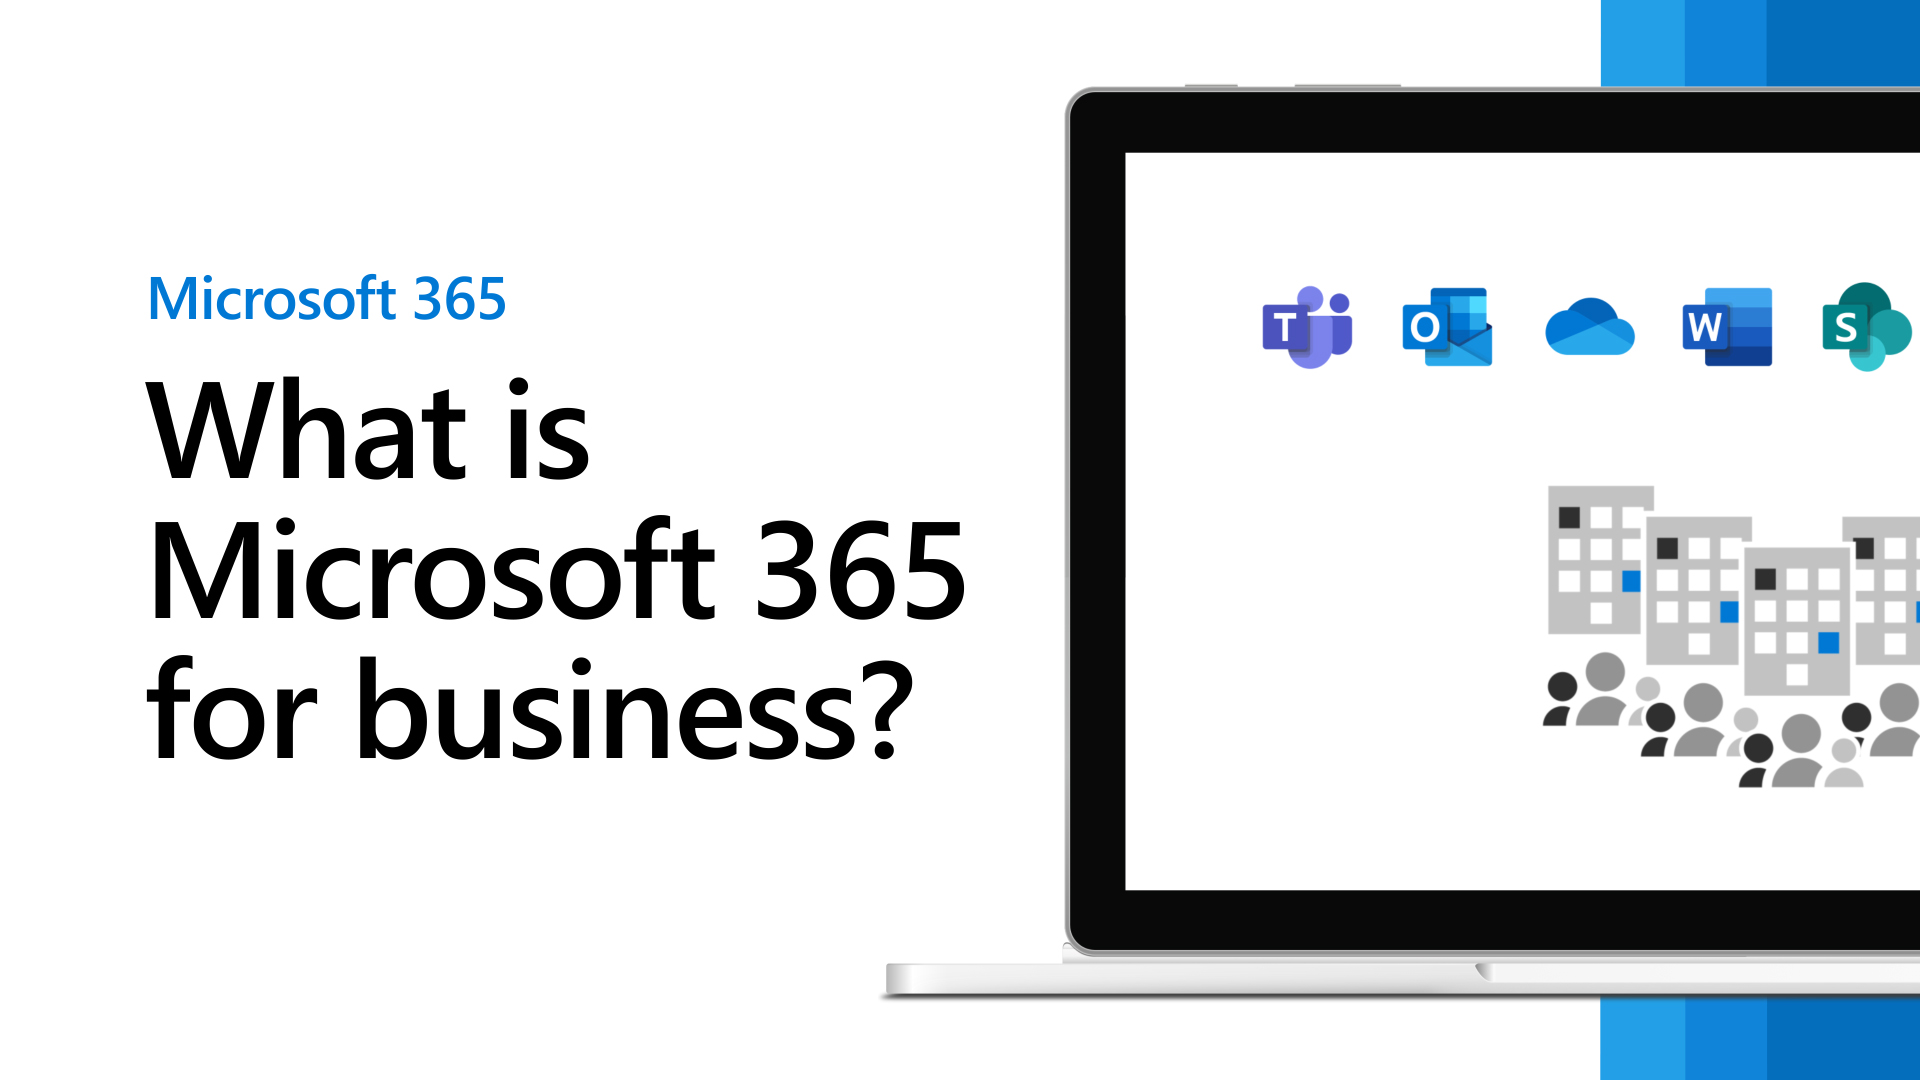 Bienvenido a Microsoft 365 para empresas - Soporte técnico de Microsoft